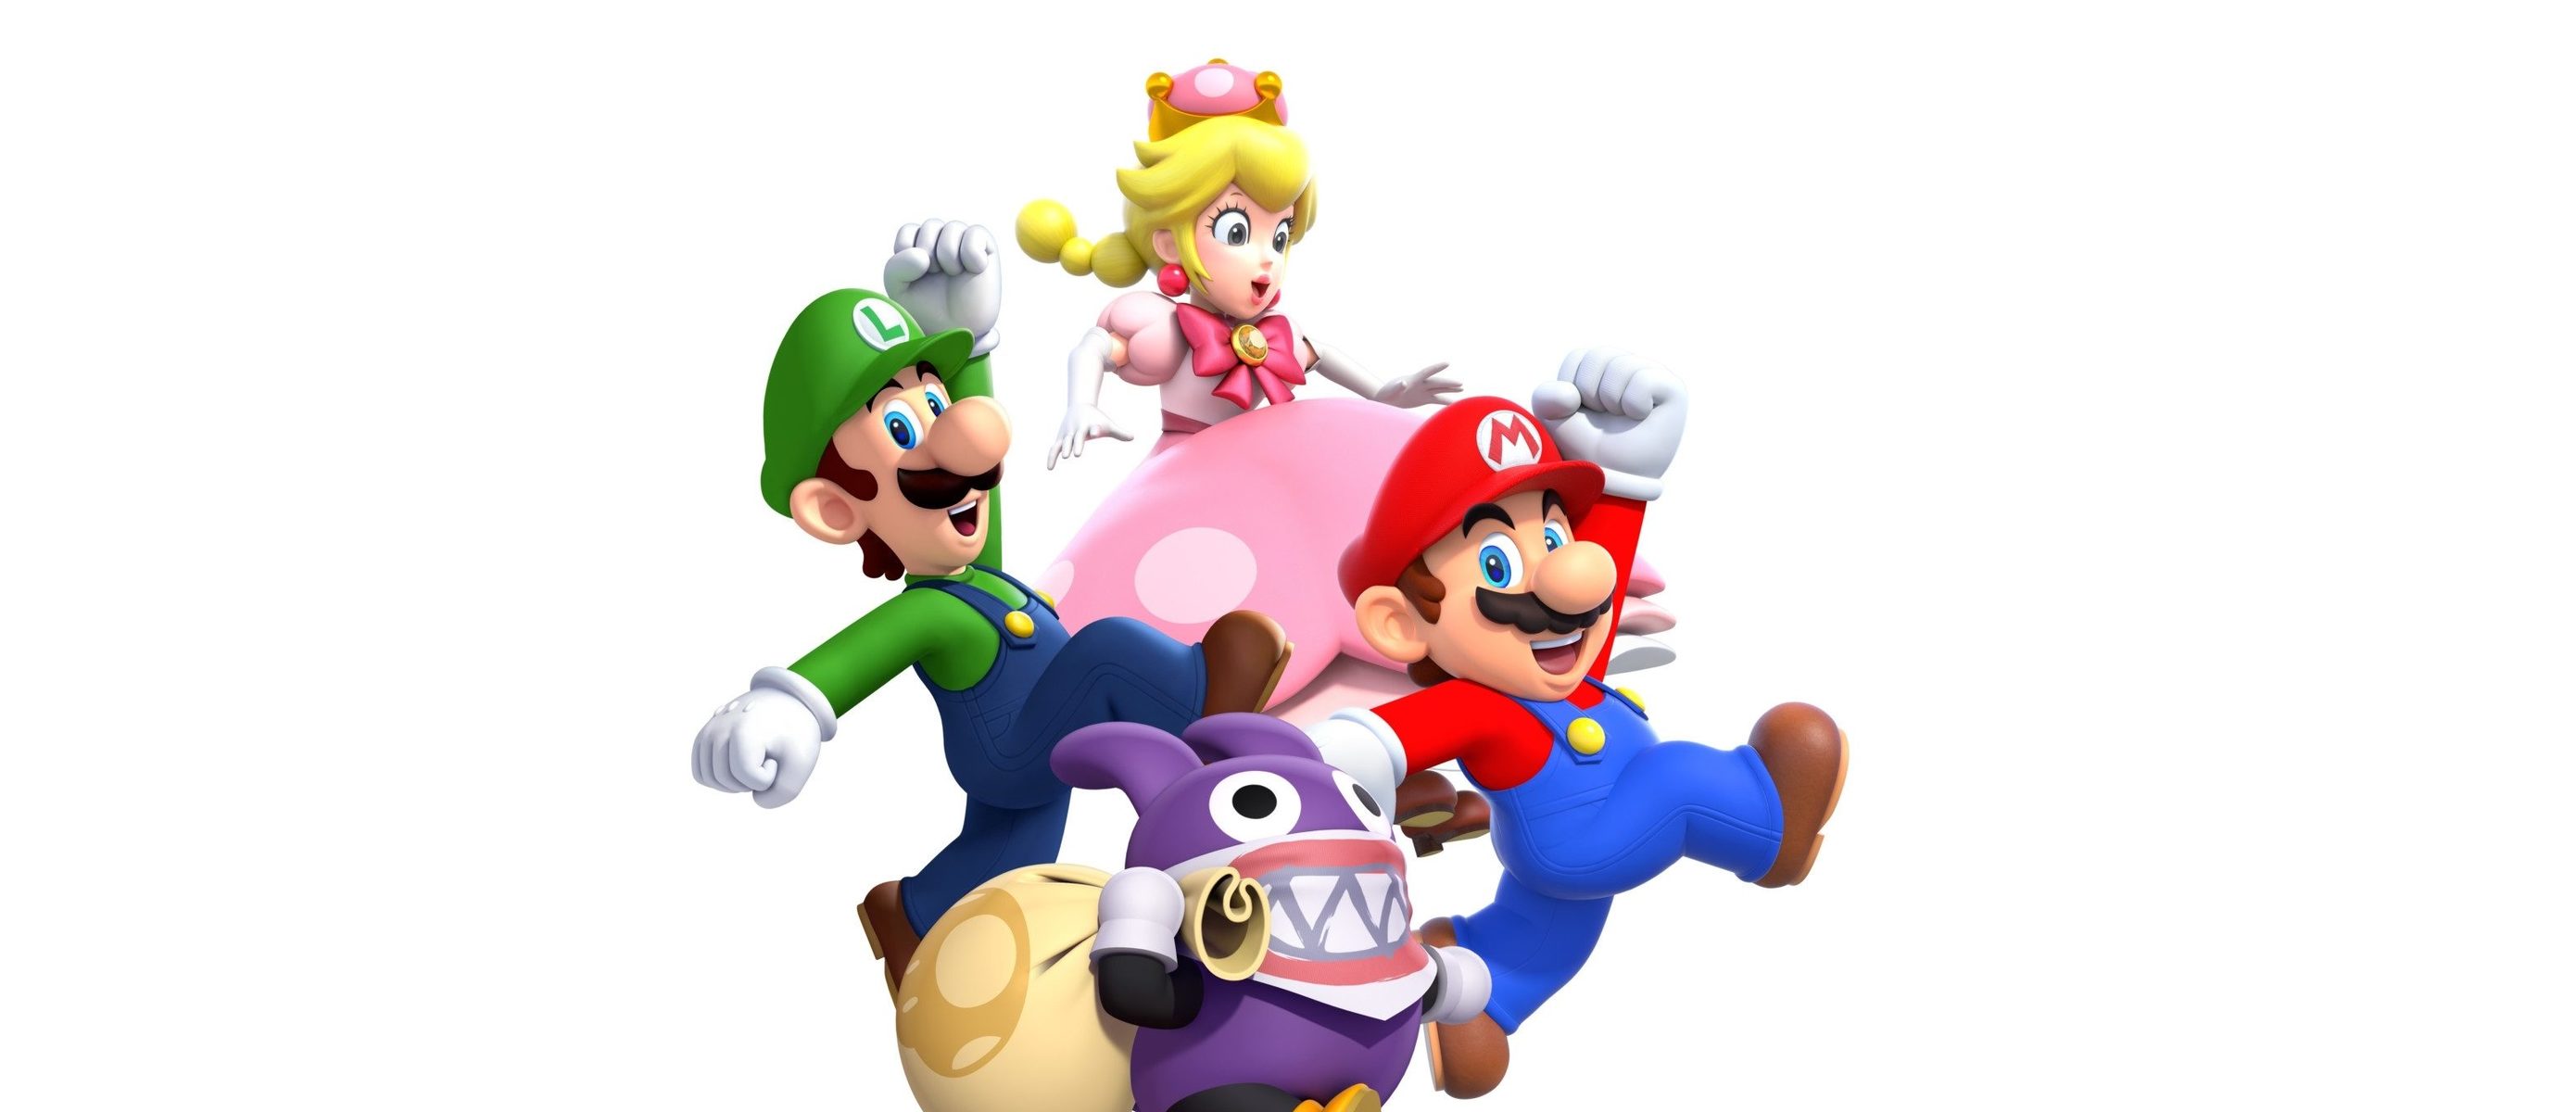 Super mario bros. New super Mario Bros. U Deluxe. Nintendo New super Mario Bros. U Deluxe. New super Mario Bros. U Deluxe Switch. Super Mario Bros Nintendo Switch.